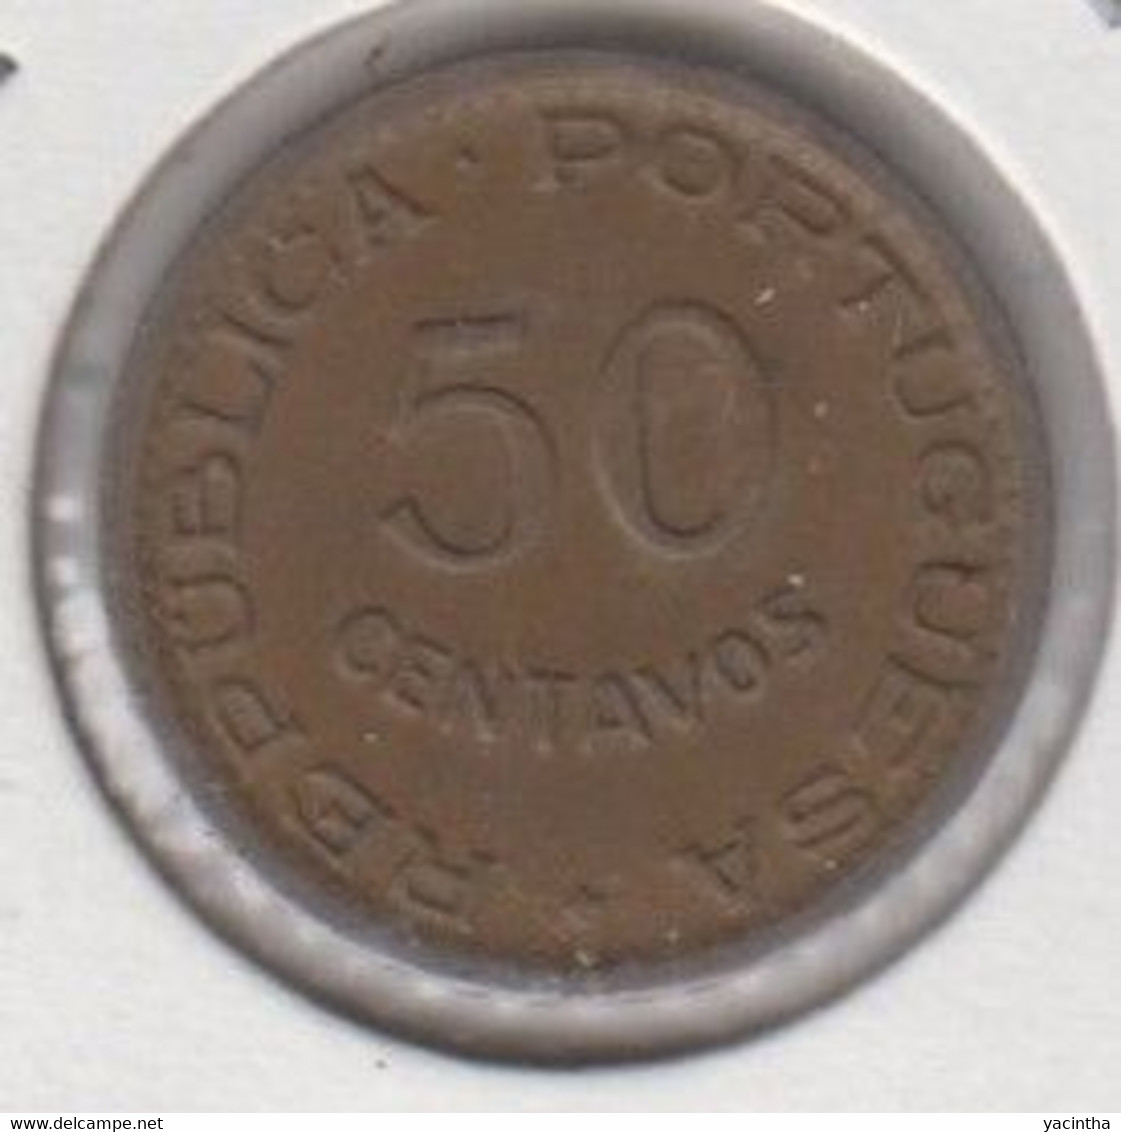 @Y@   Angola  50  Centavos  1954    (12) - Angola